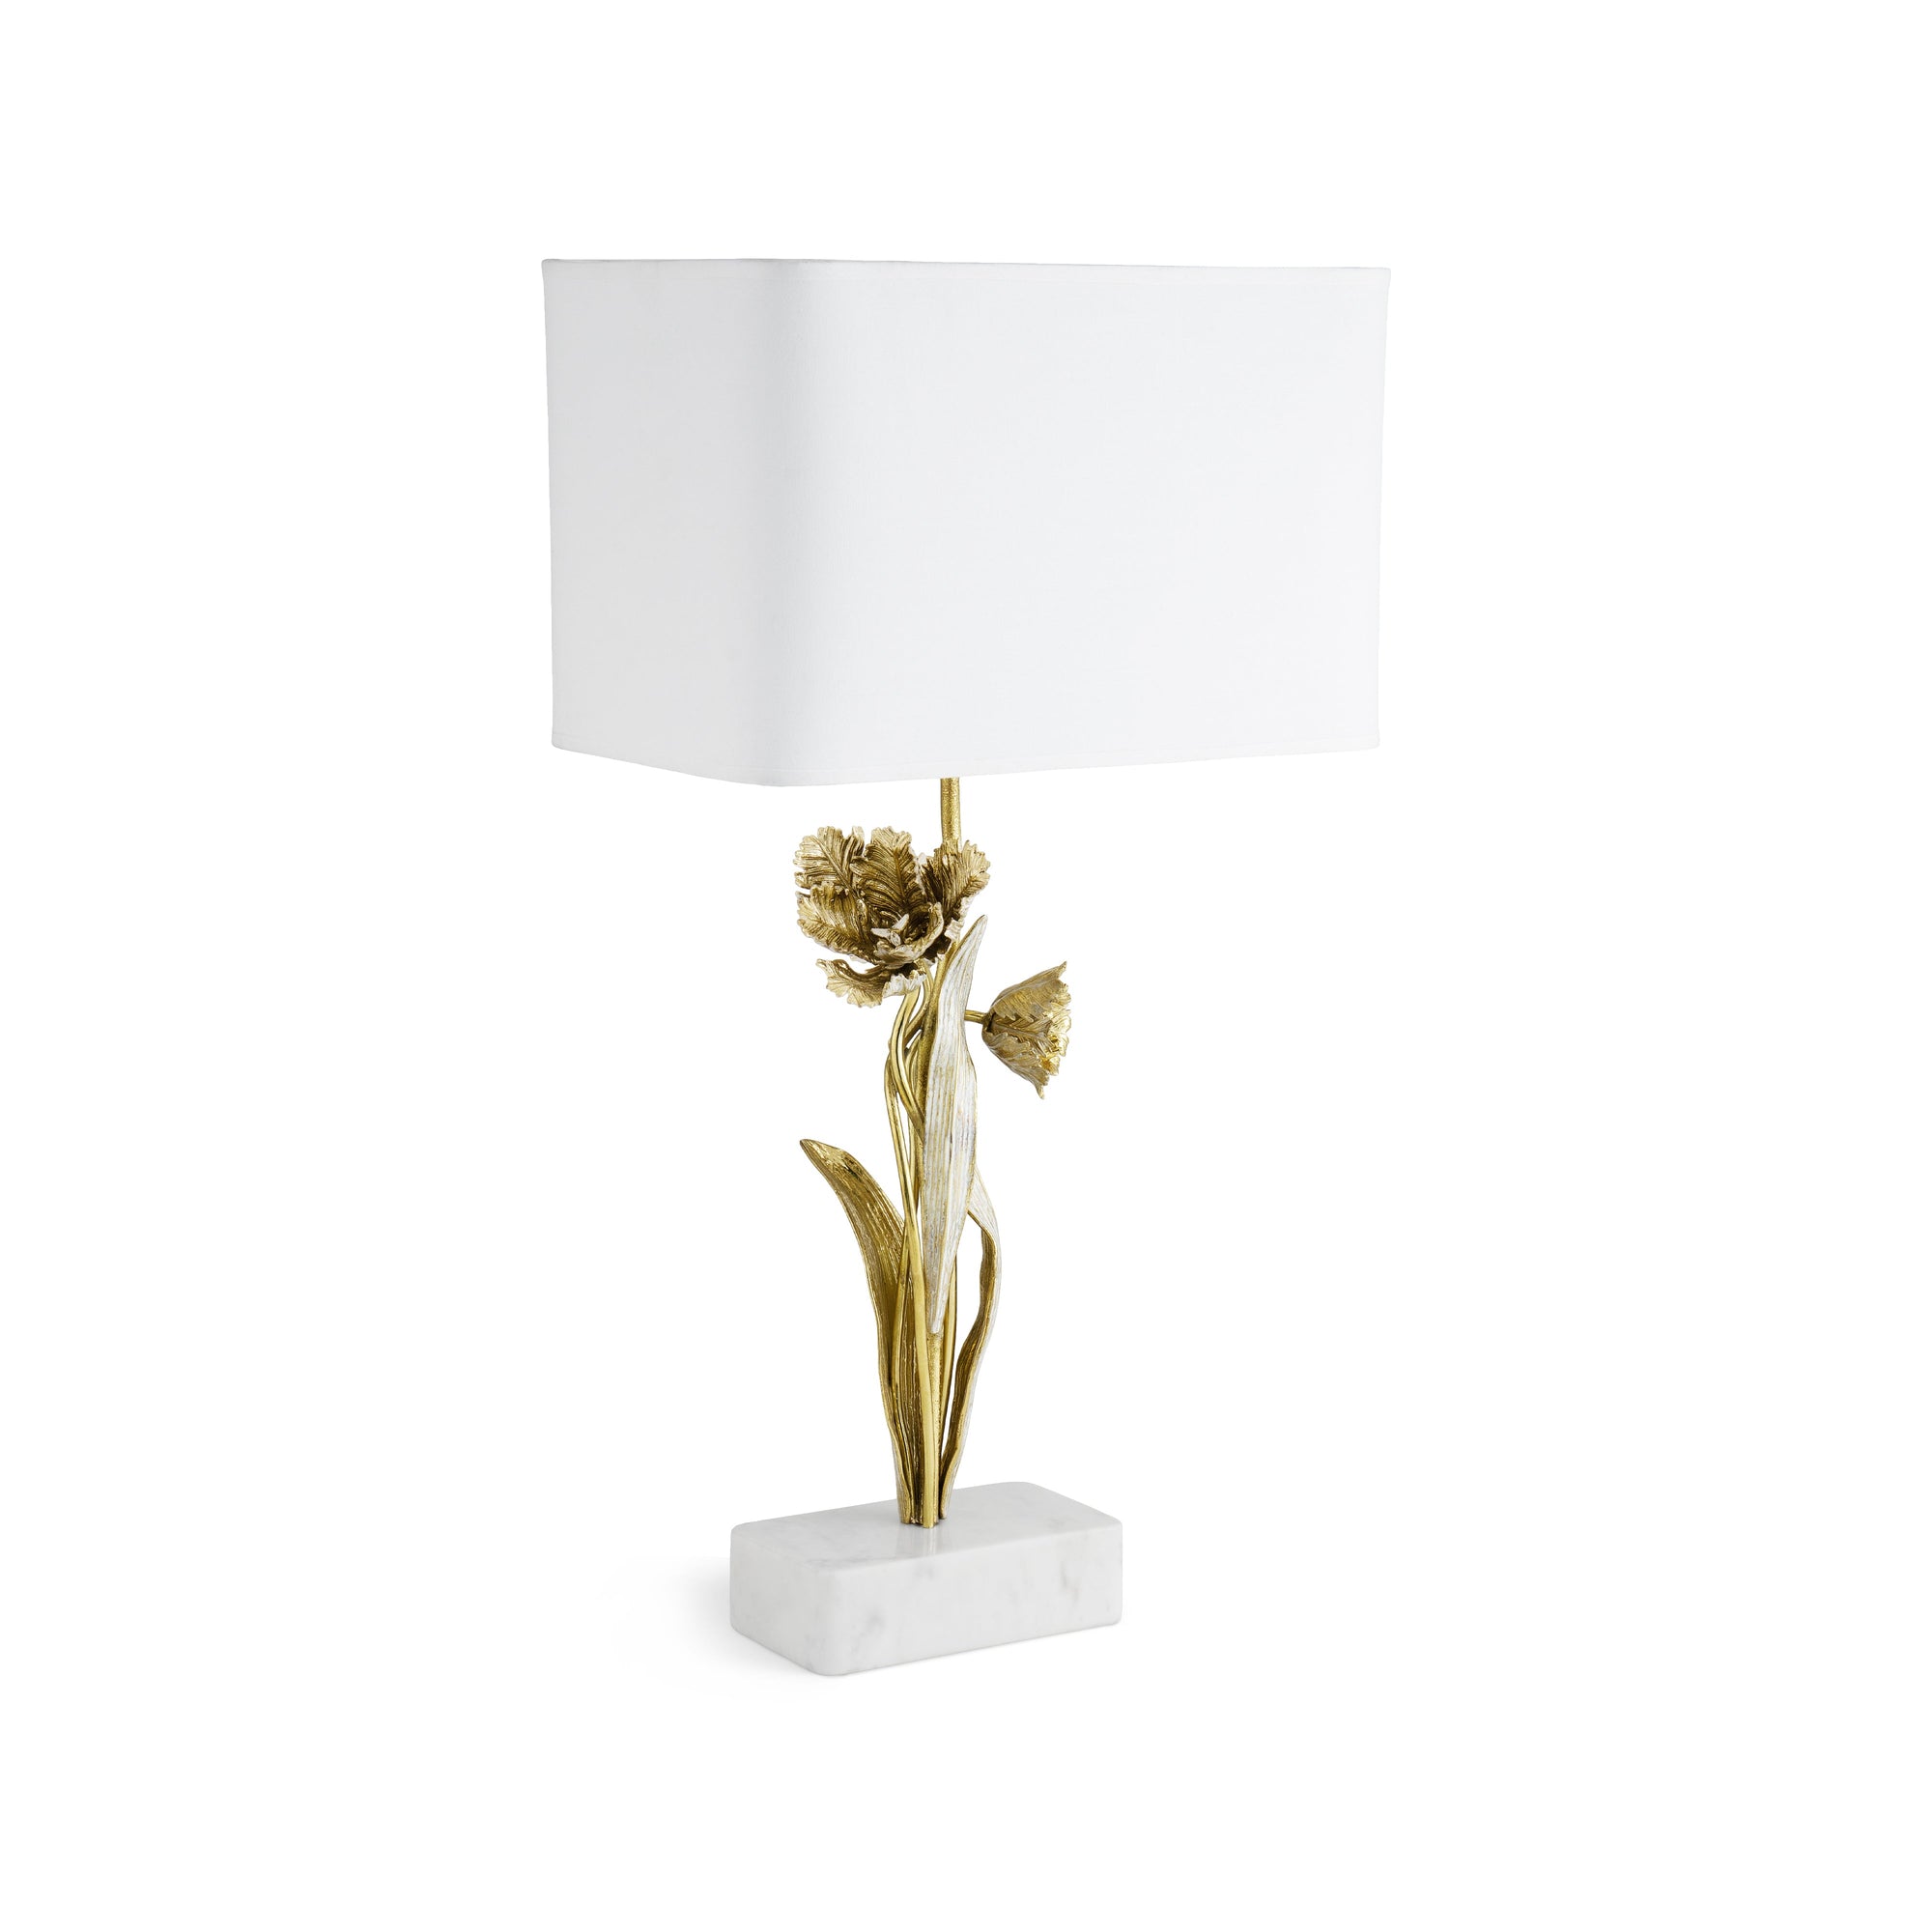 Michael Aram Tulip Table Lamp